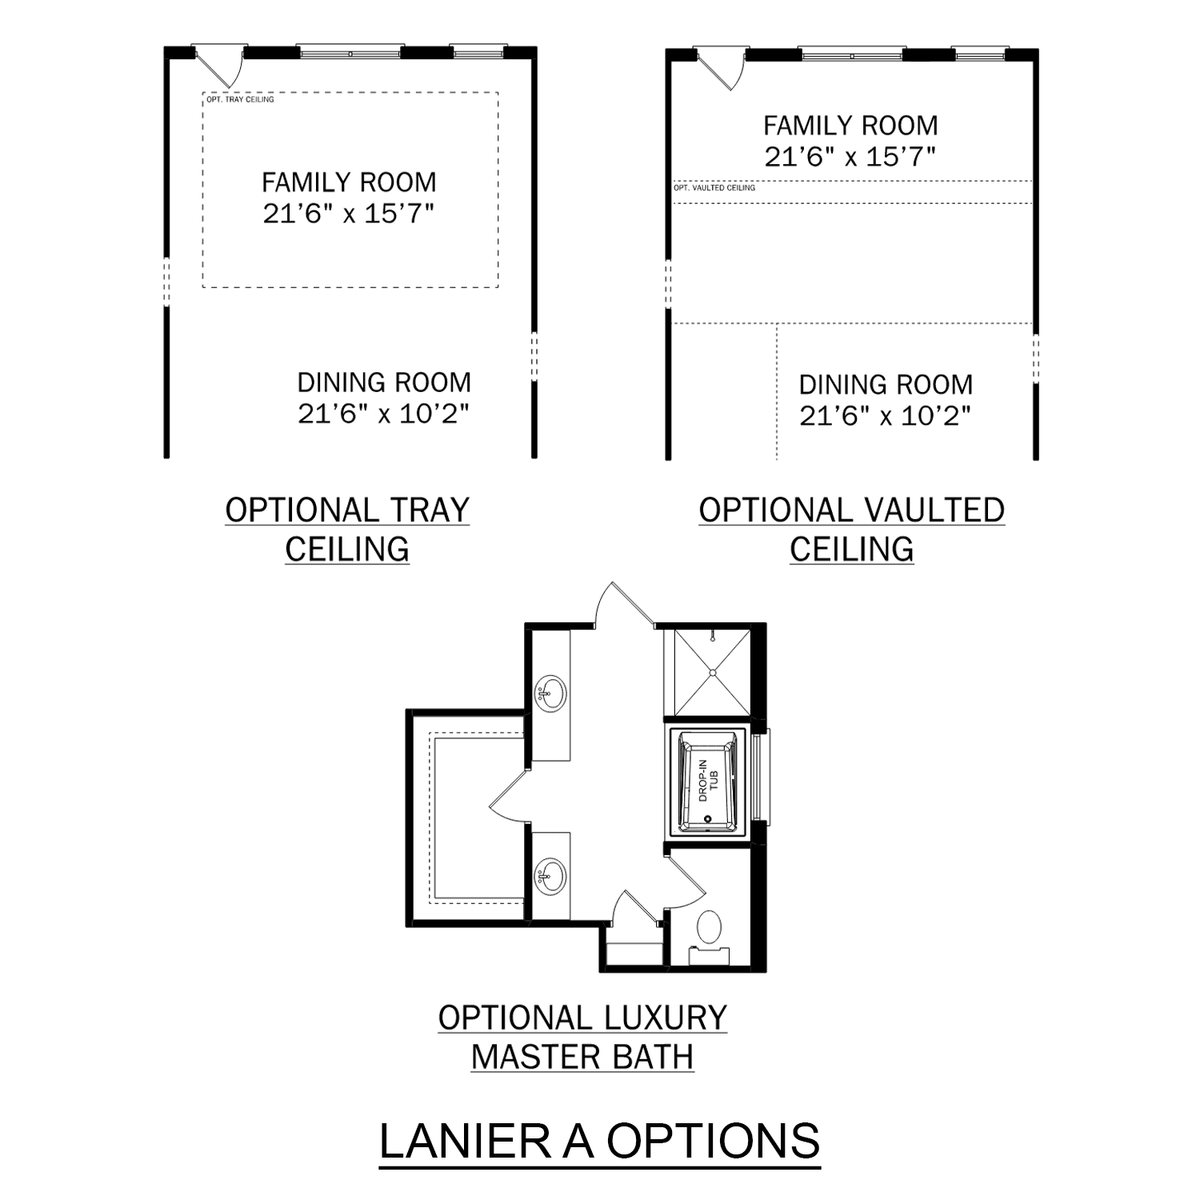 2 - The Lanier floor plan layout for 181 Slade Thomas Drive in Davidson Homes' Pikes Ridge community.